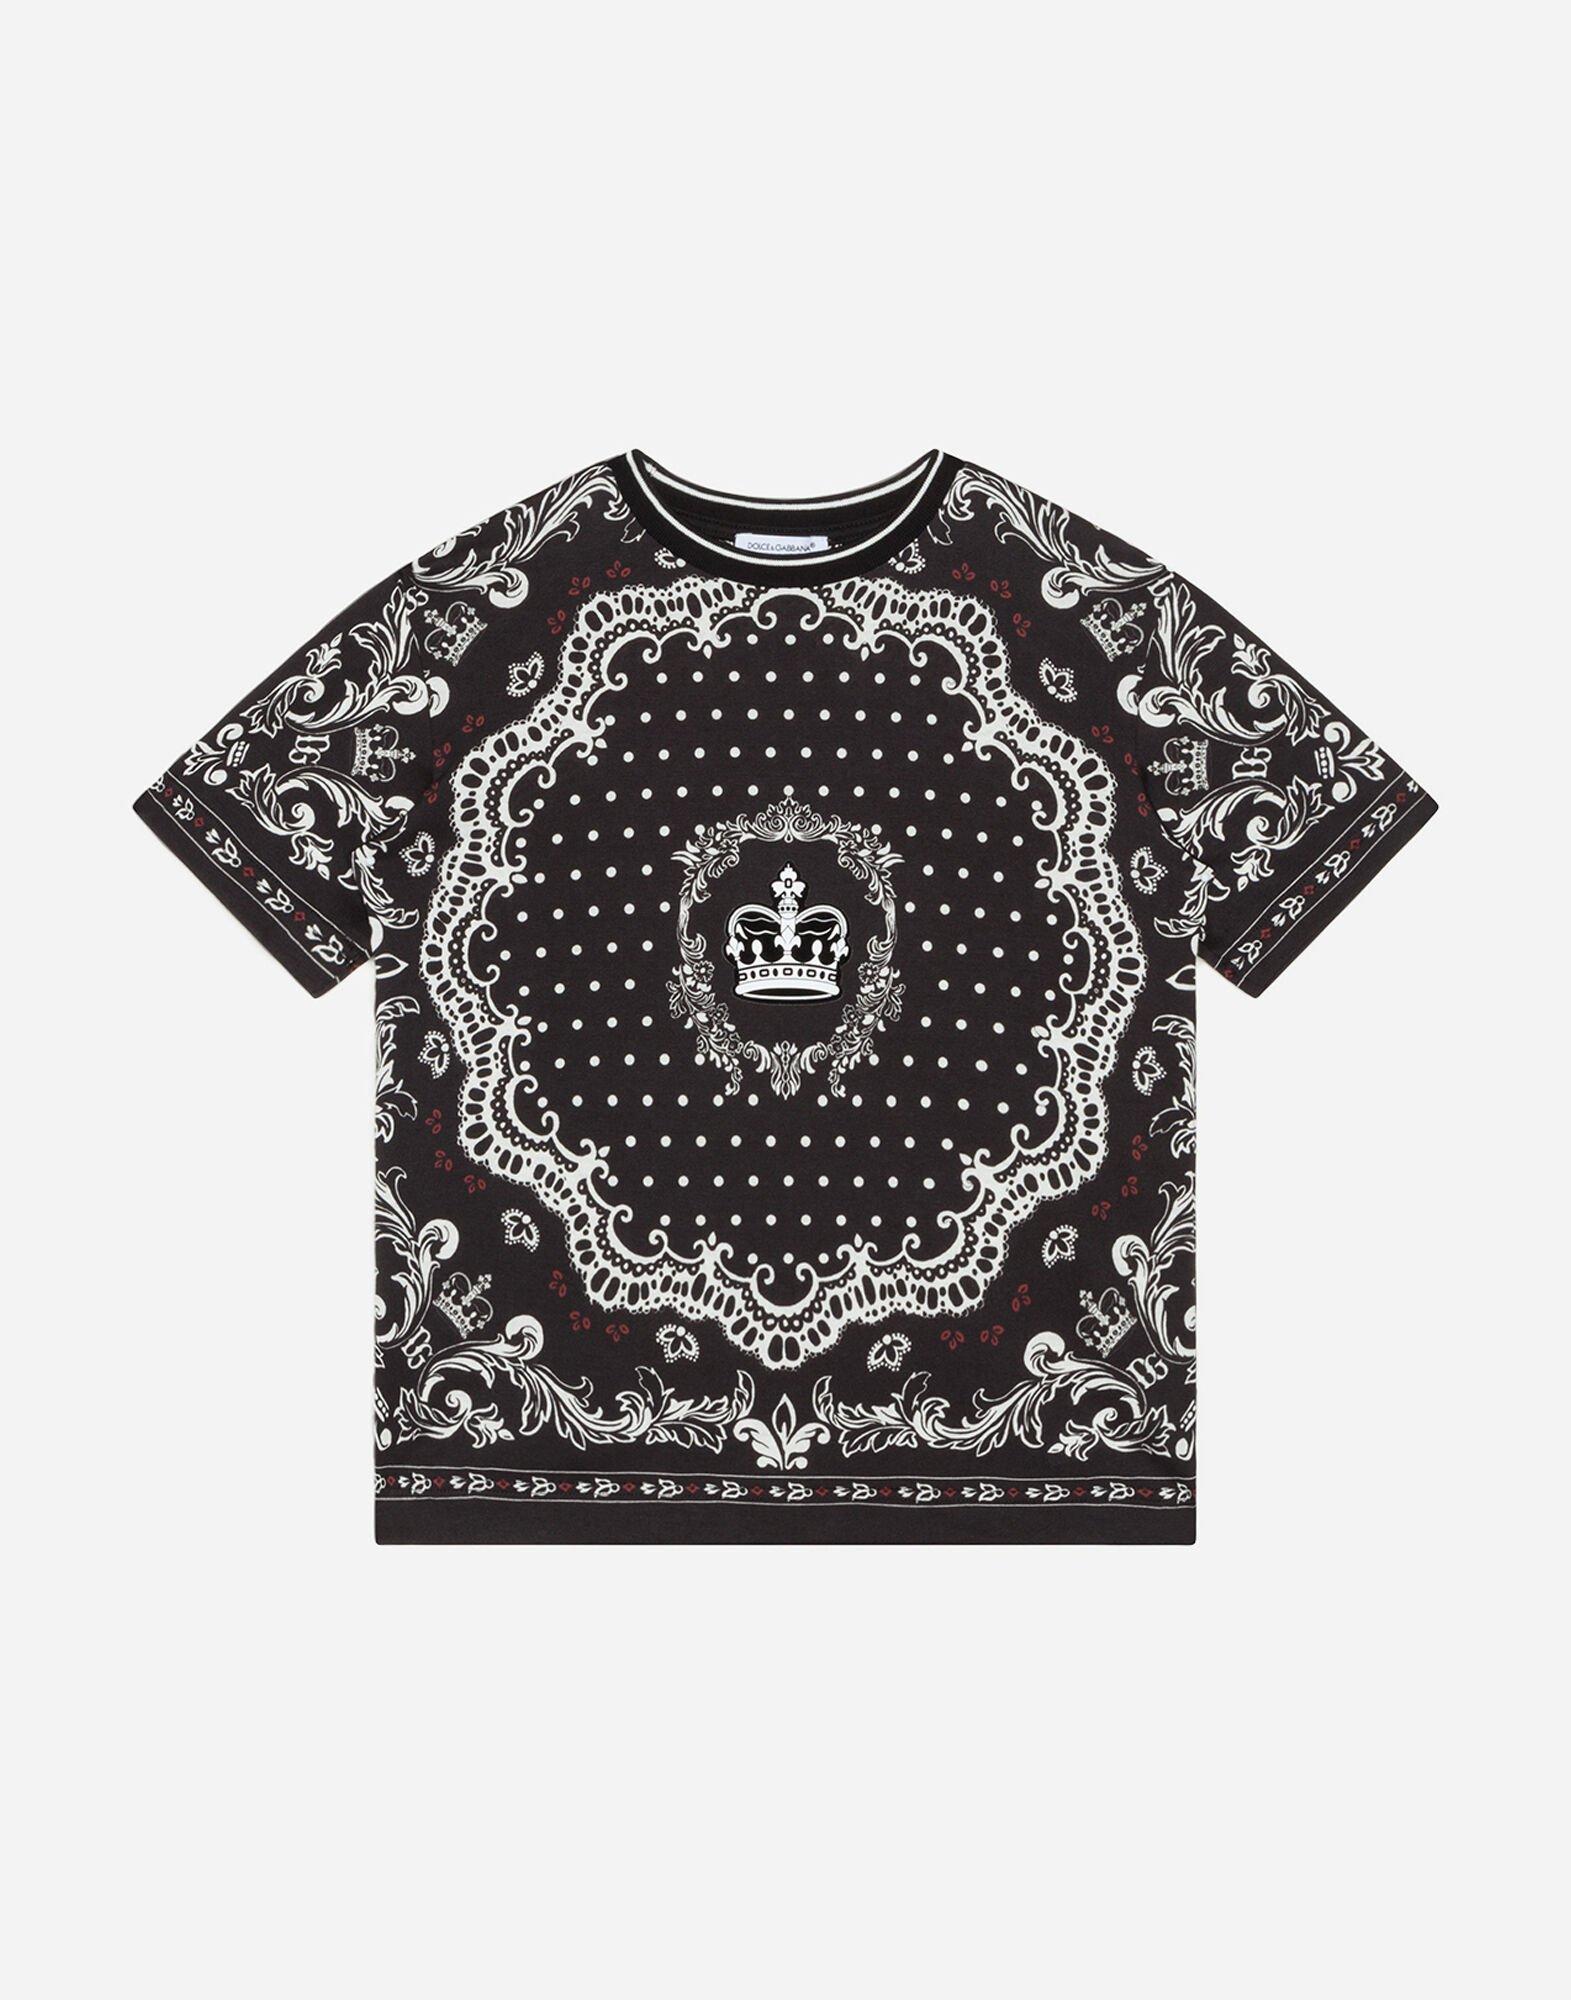 Dolce & Gabbana Cotton Jersey T-shirt With Bandana Print in Black/White ...